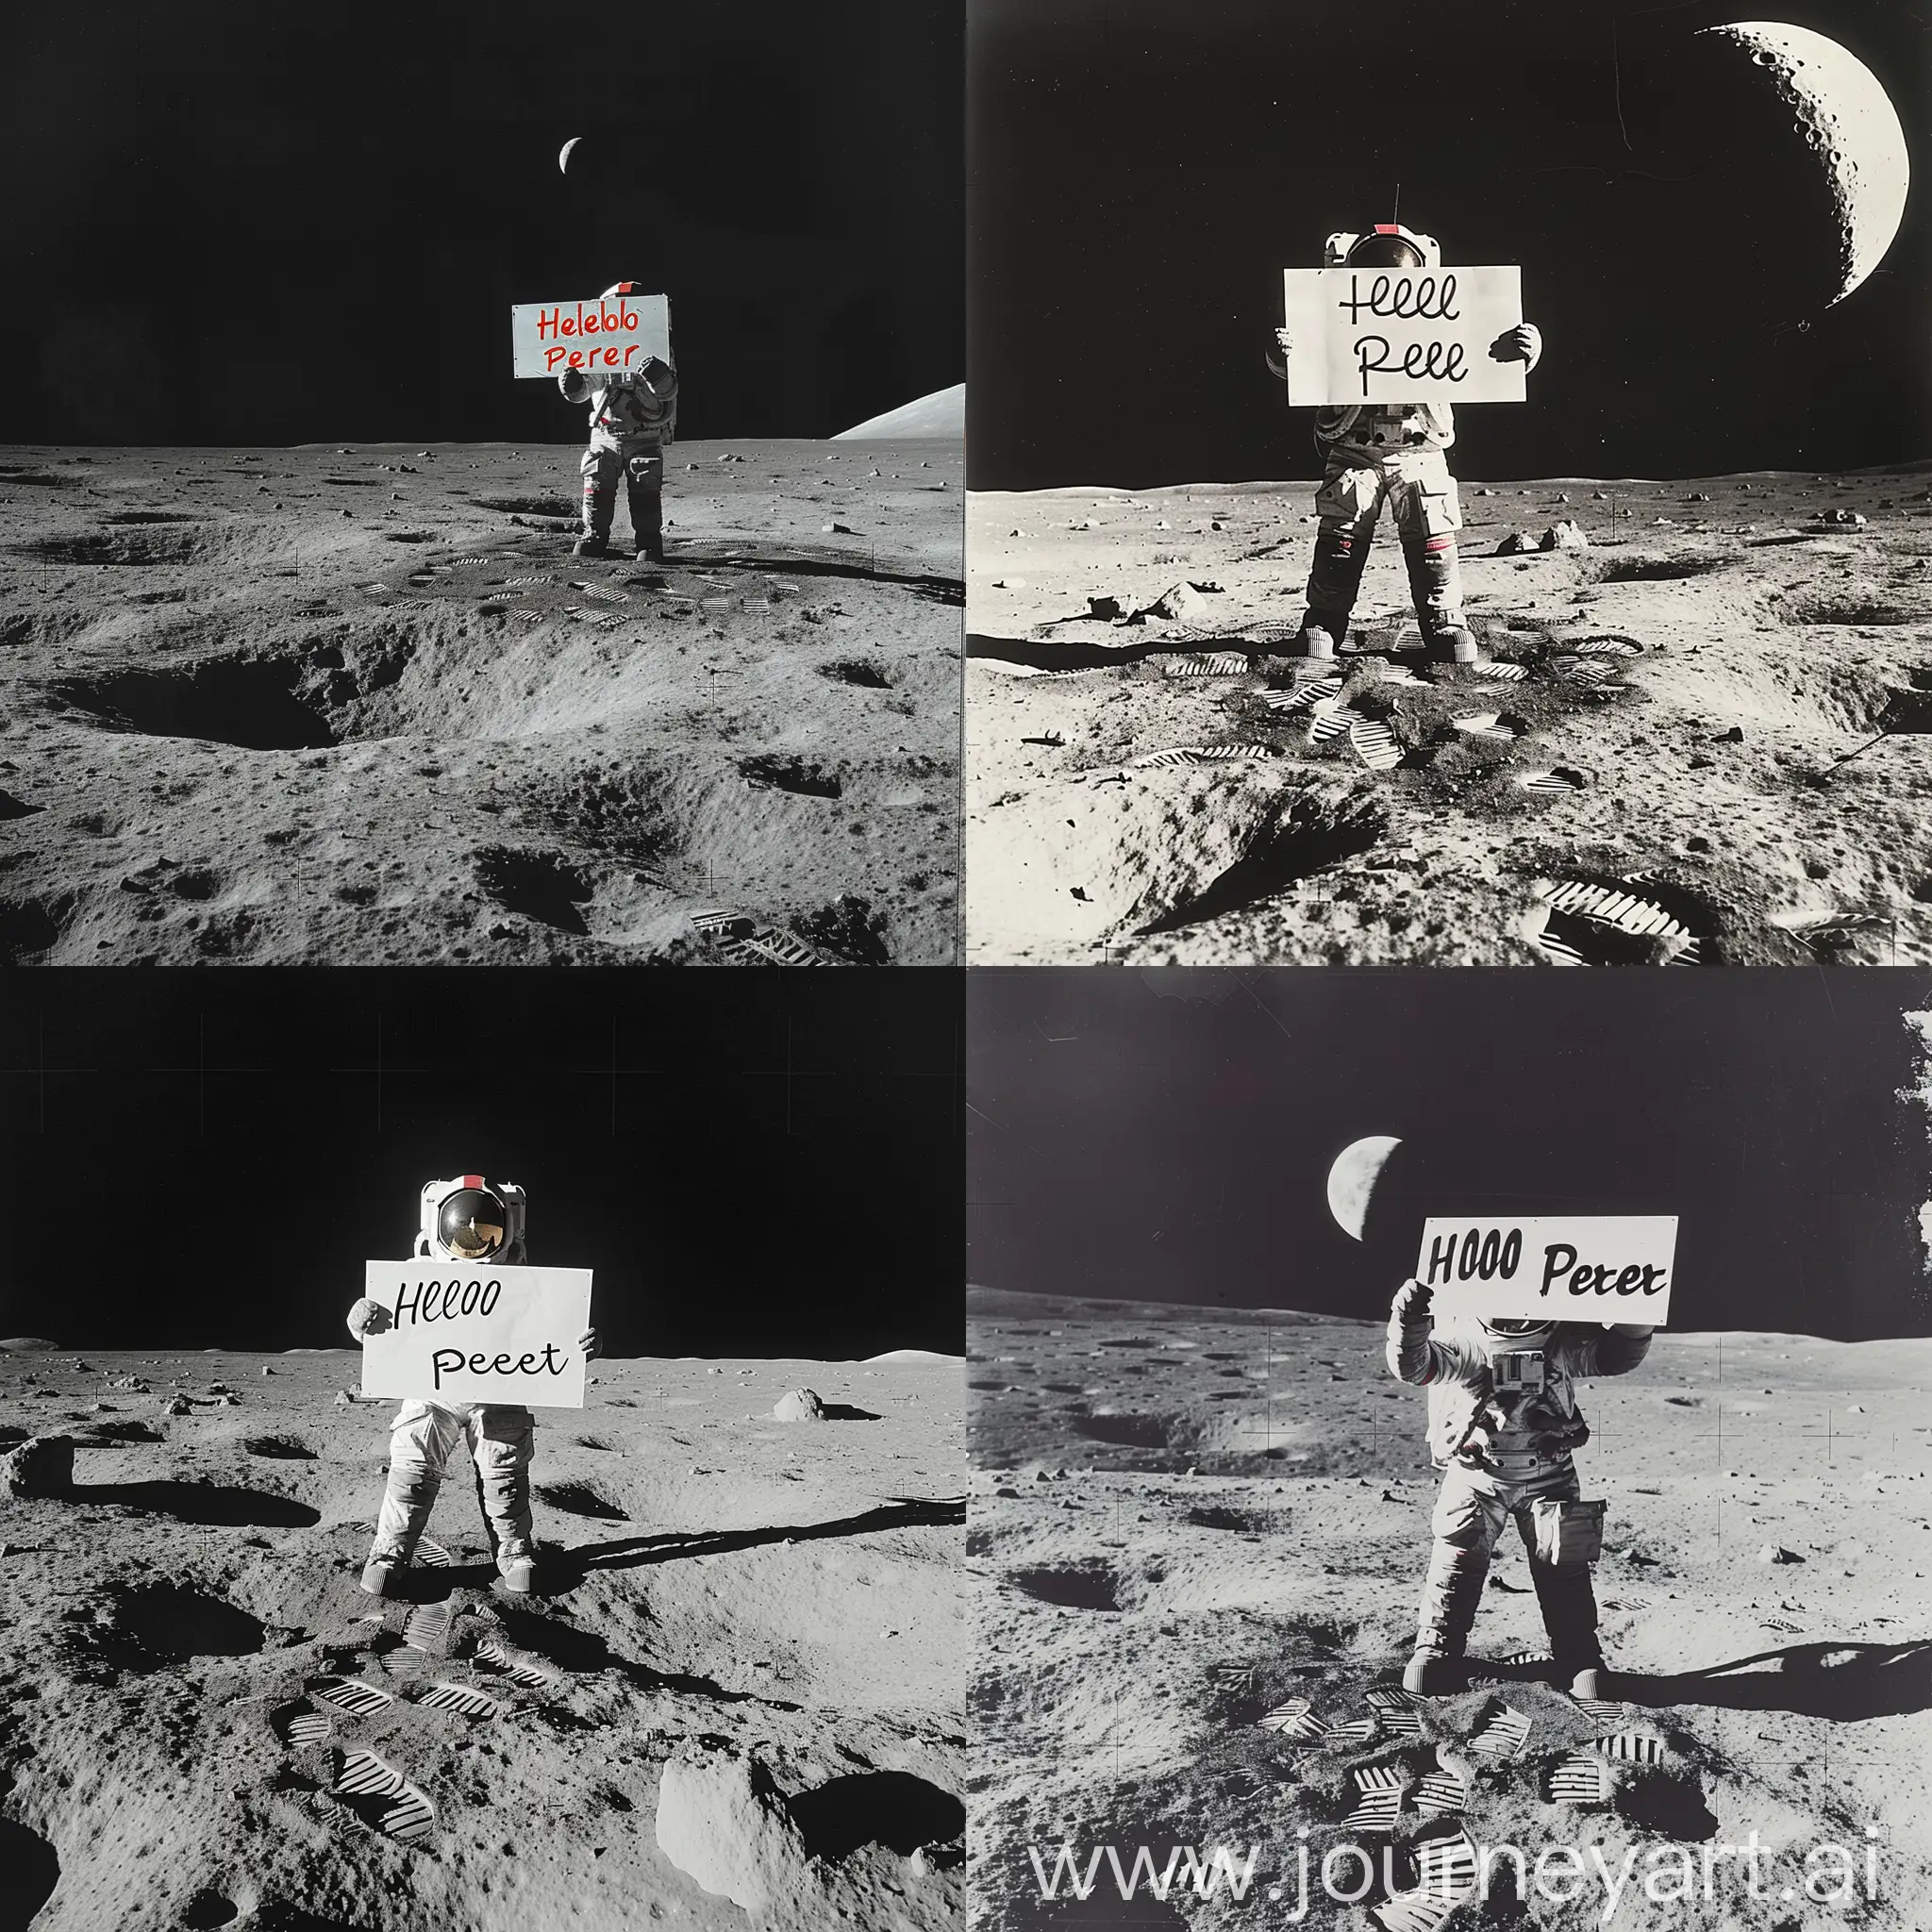 Man on moon holding signboard "Hello Peter"